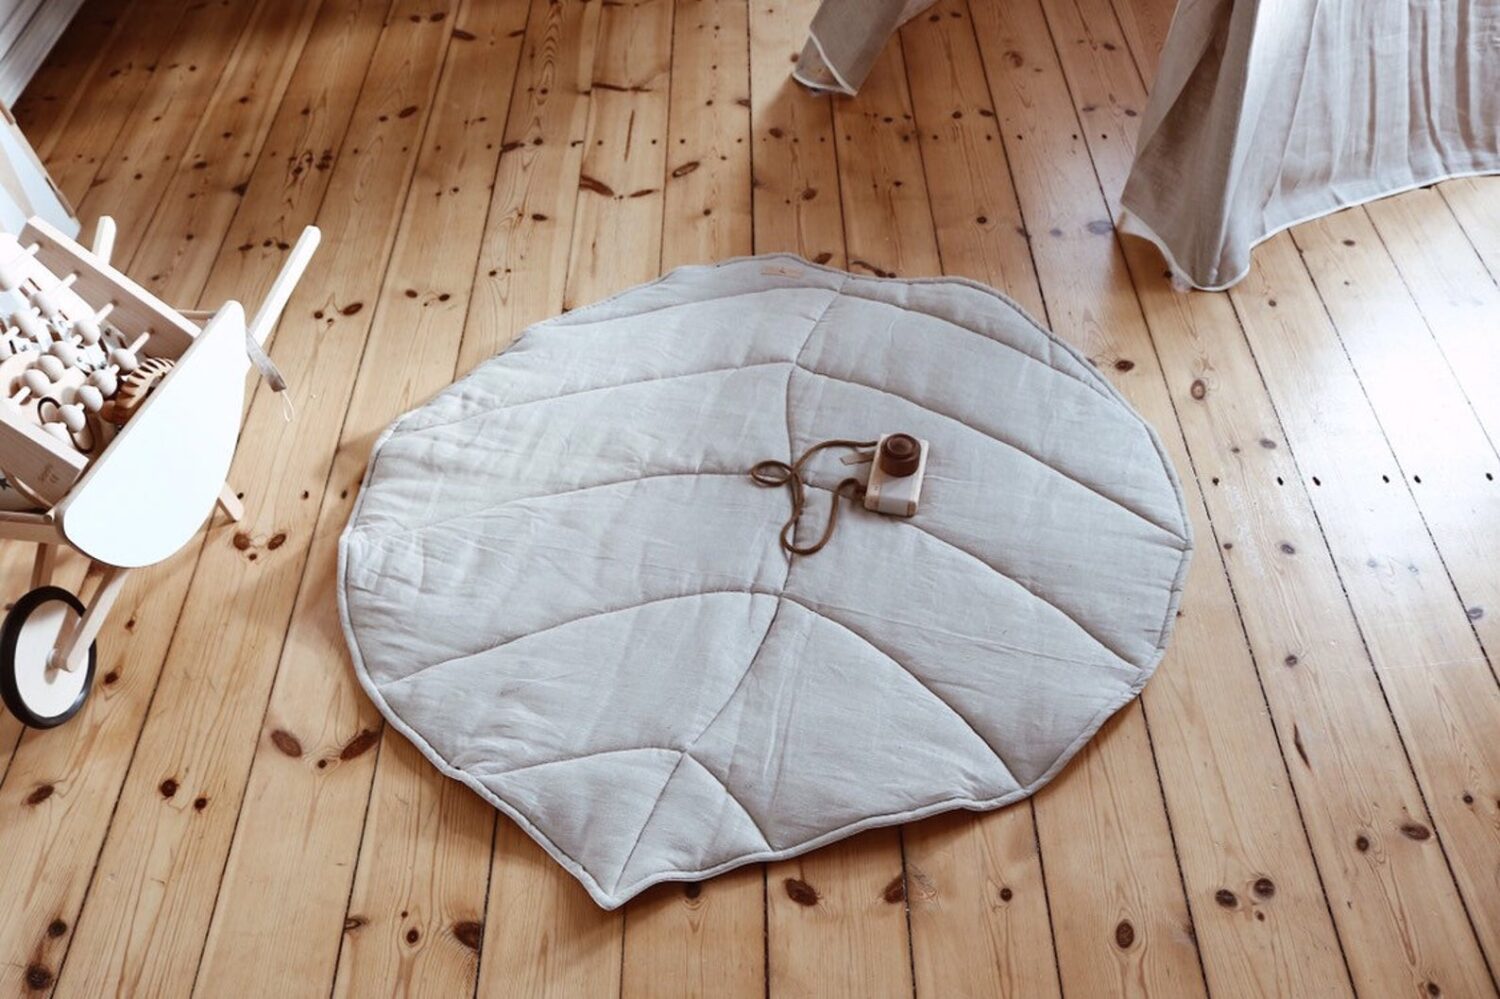 Linen tipi tent with leaf mat